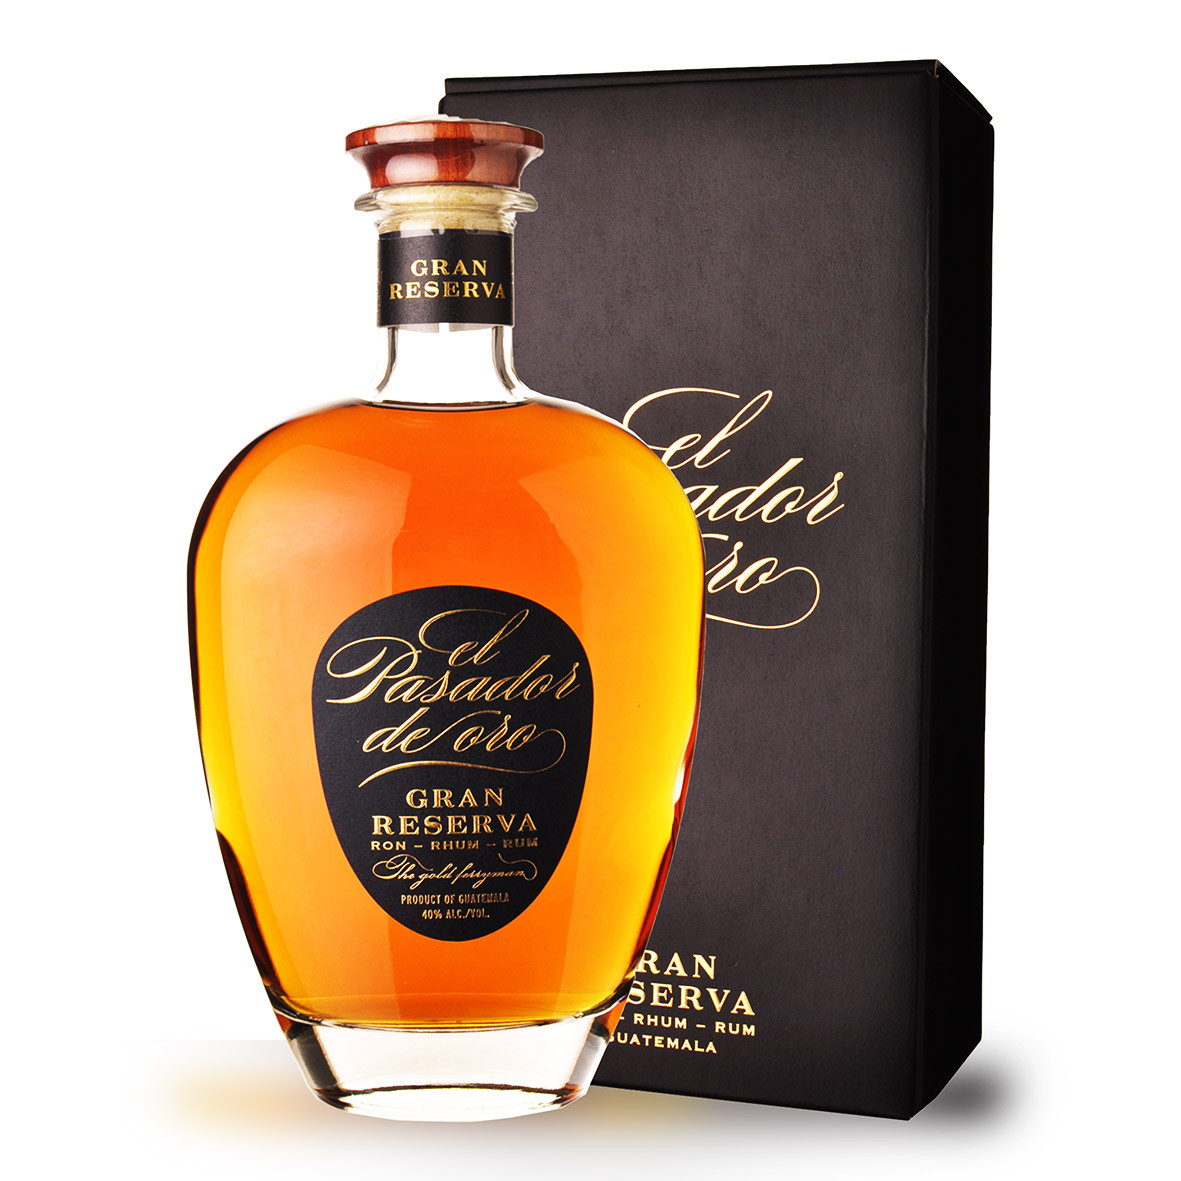 El Pasador De Oro - Gran Reserva | Rum from Guatemala